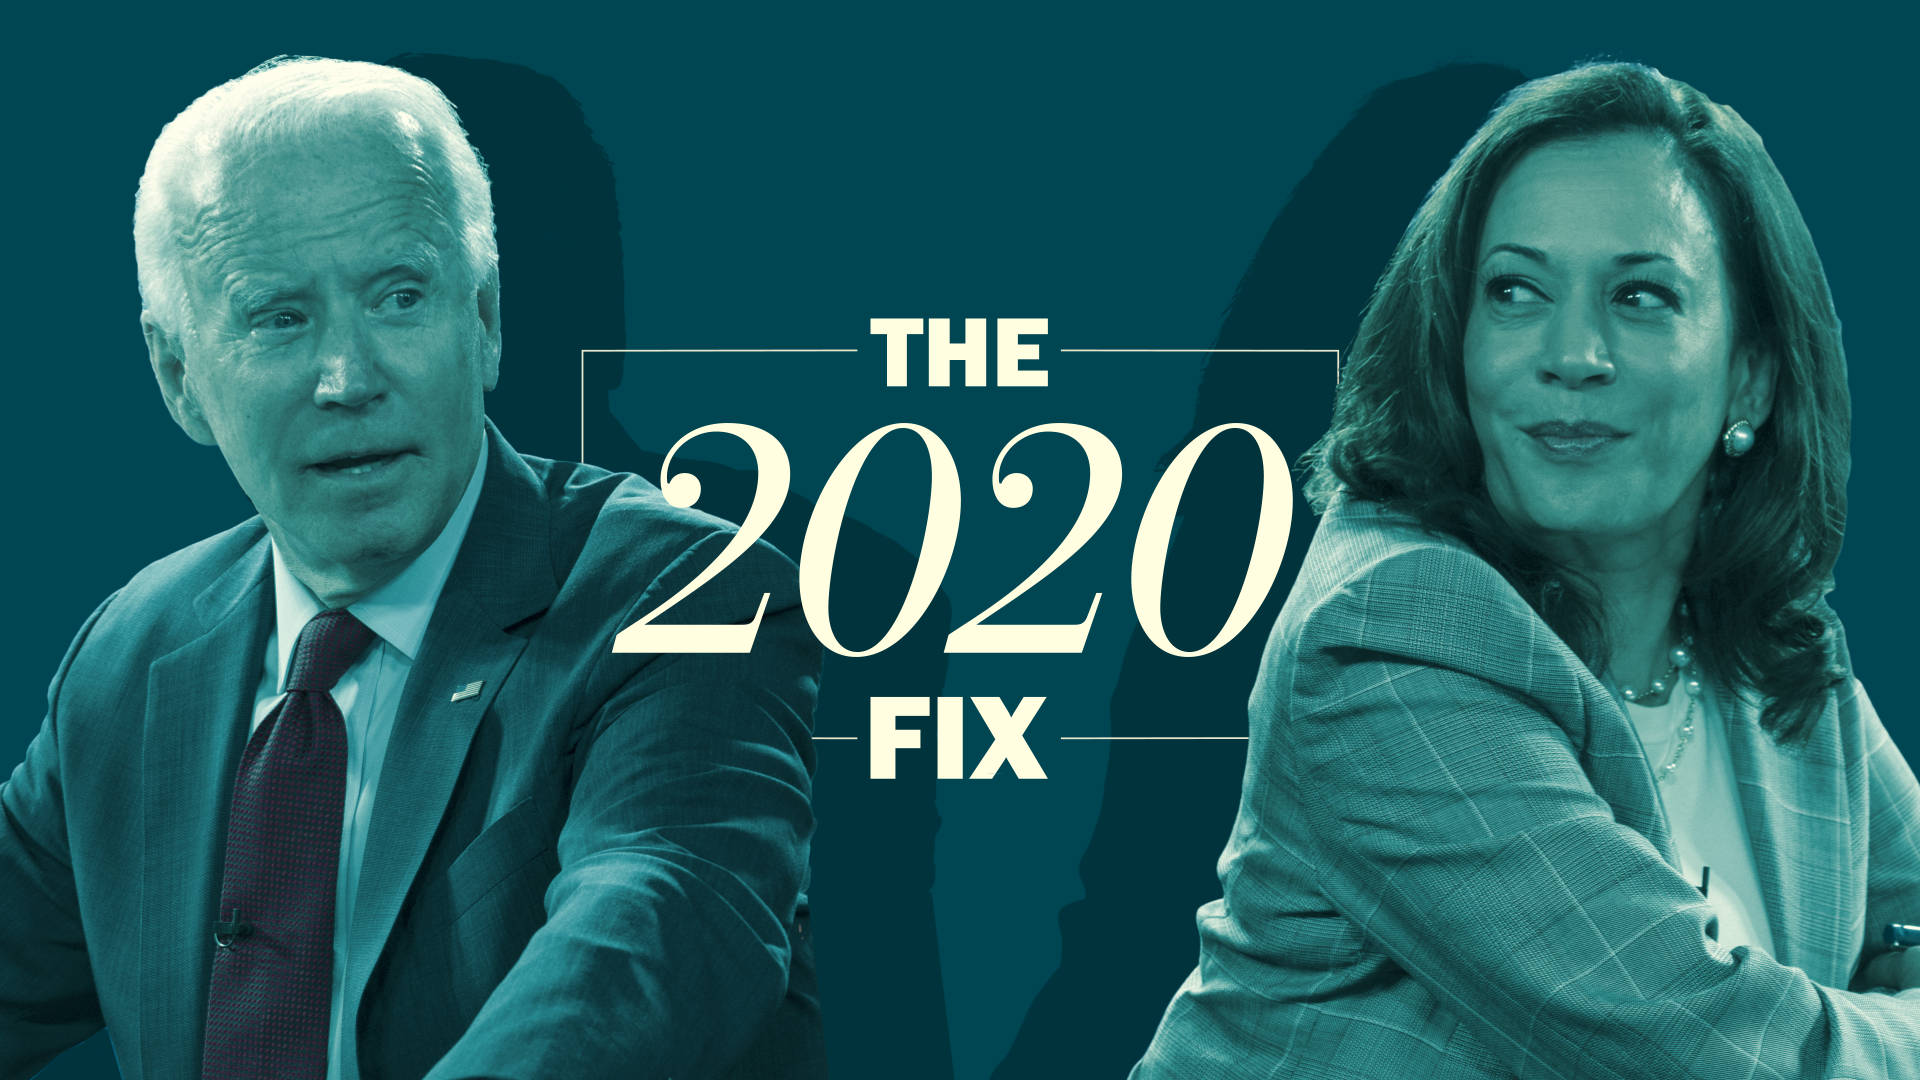 Joe Biden & Vice President Kamala Harris at the 2020 Democratic National Convention Wallpaper